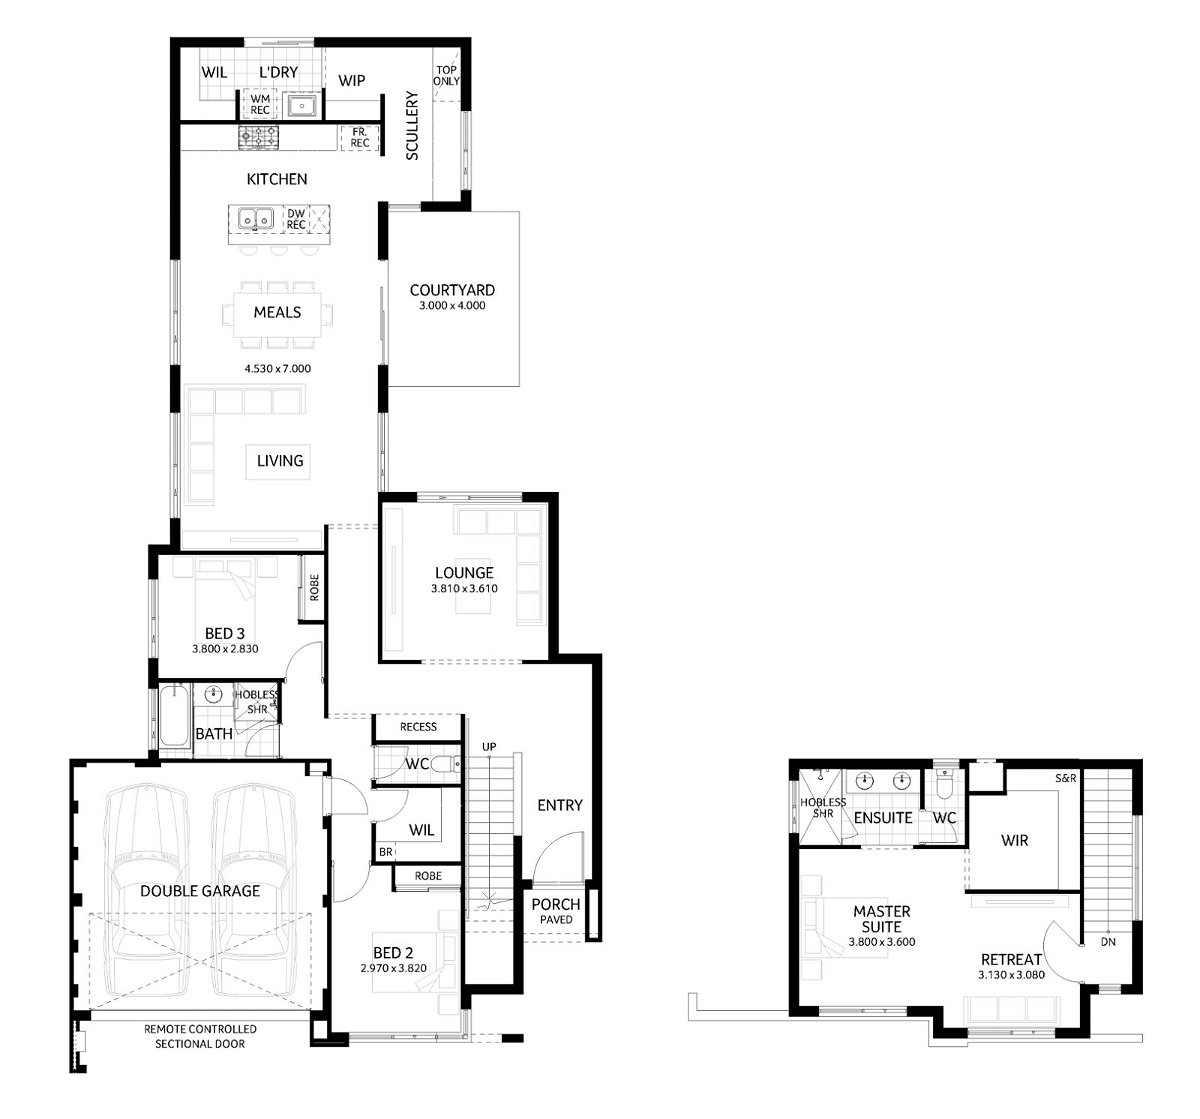 Plunkett Homes - Brighton | Lifestyle - Floorplan - Brighton Lifestyle Contemporary Marketing Plan